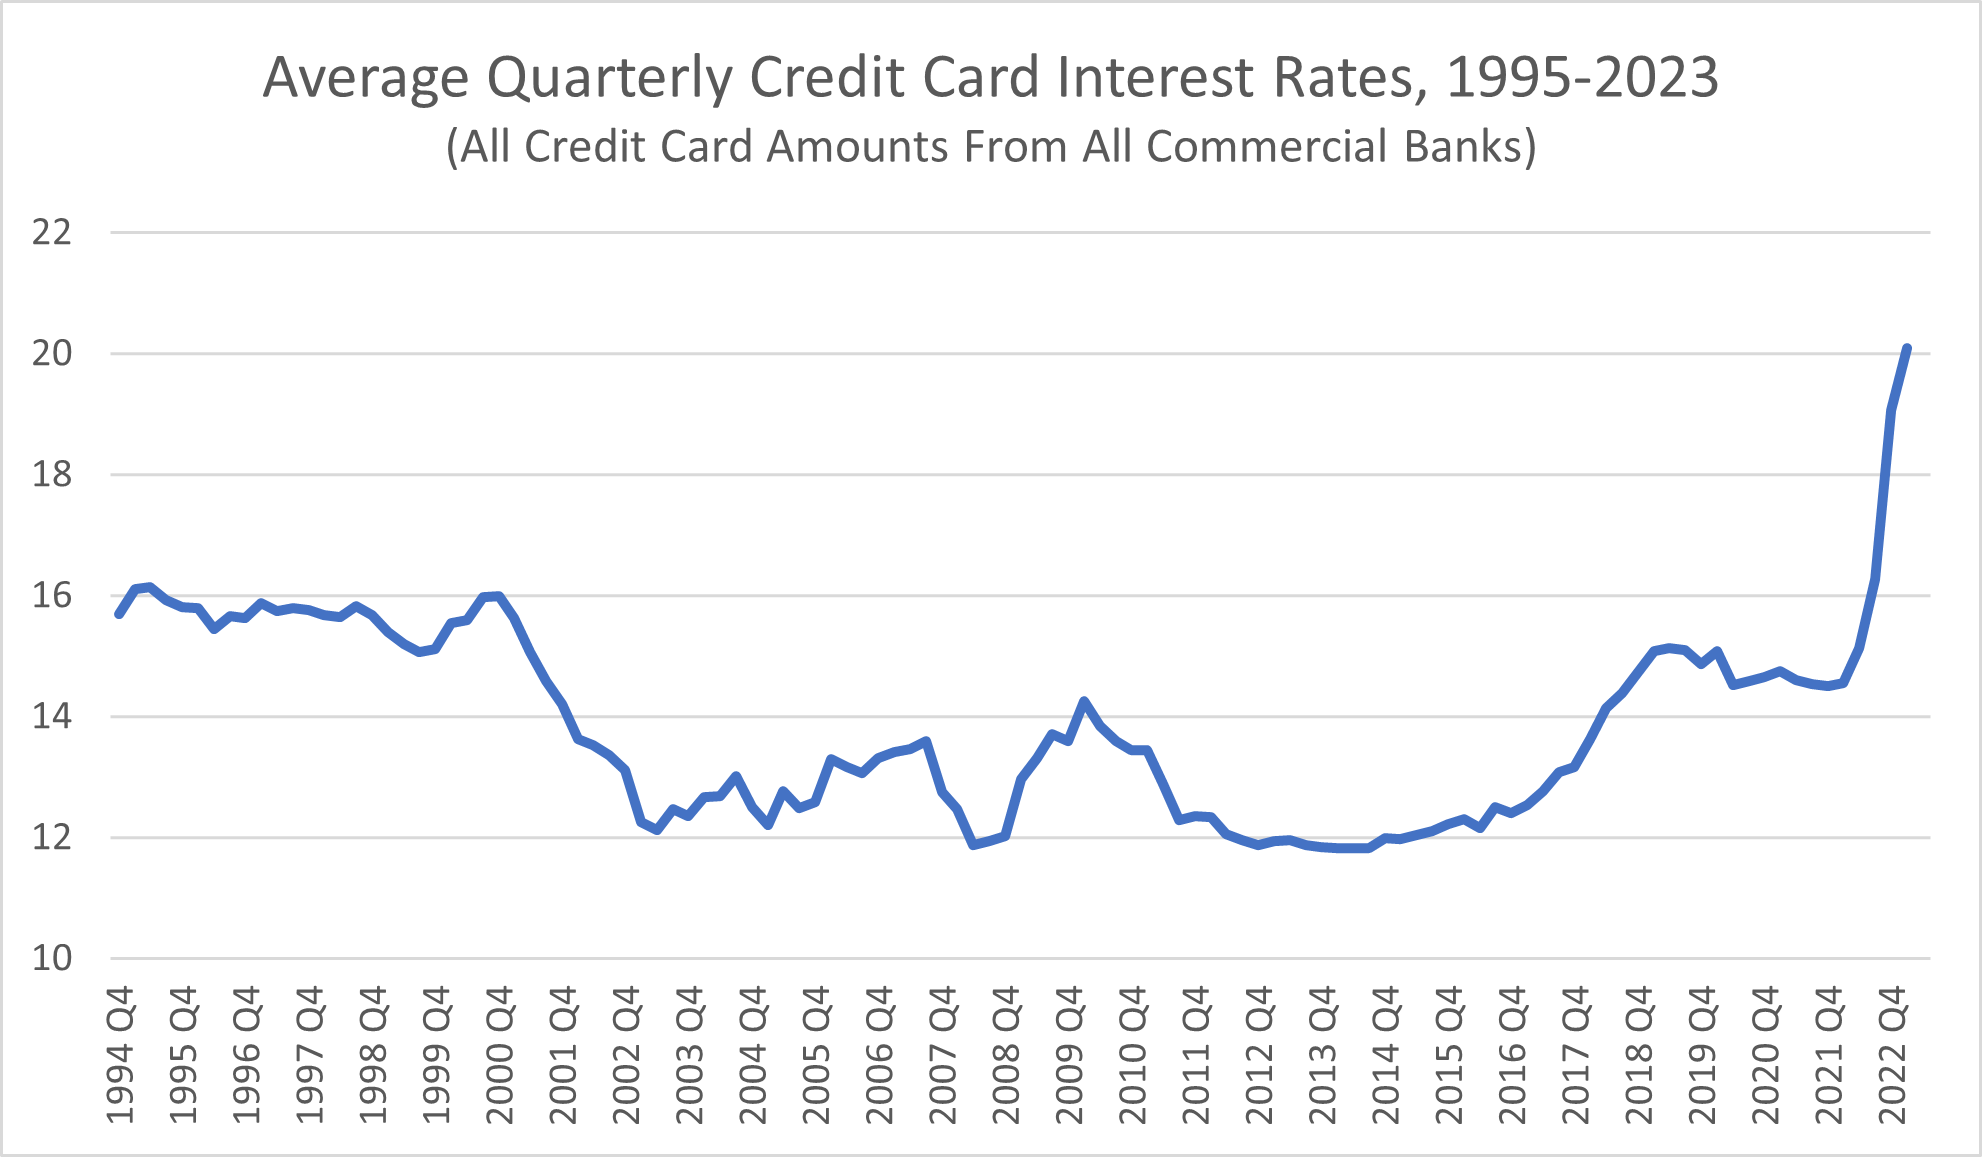 Average Quarterly Credit Card Interest Rates, 1995-2023